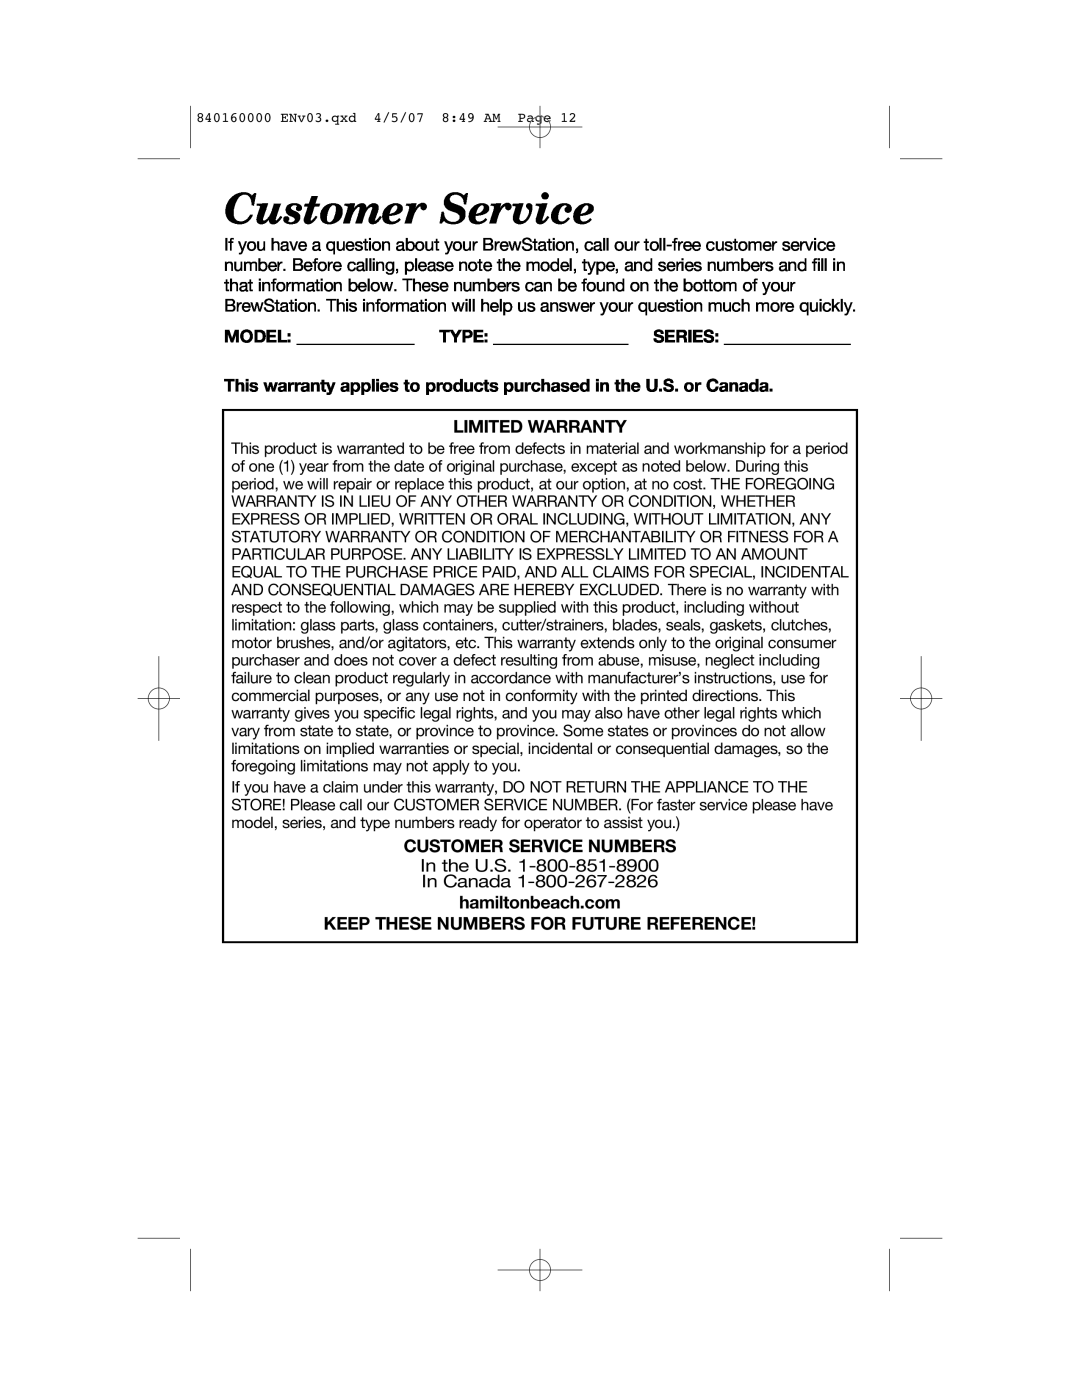 Hamilton Beach D43012B manual Model Type Series, Limited Warranty, Customer Service Numbers 